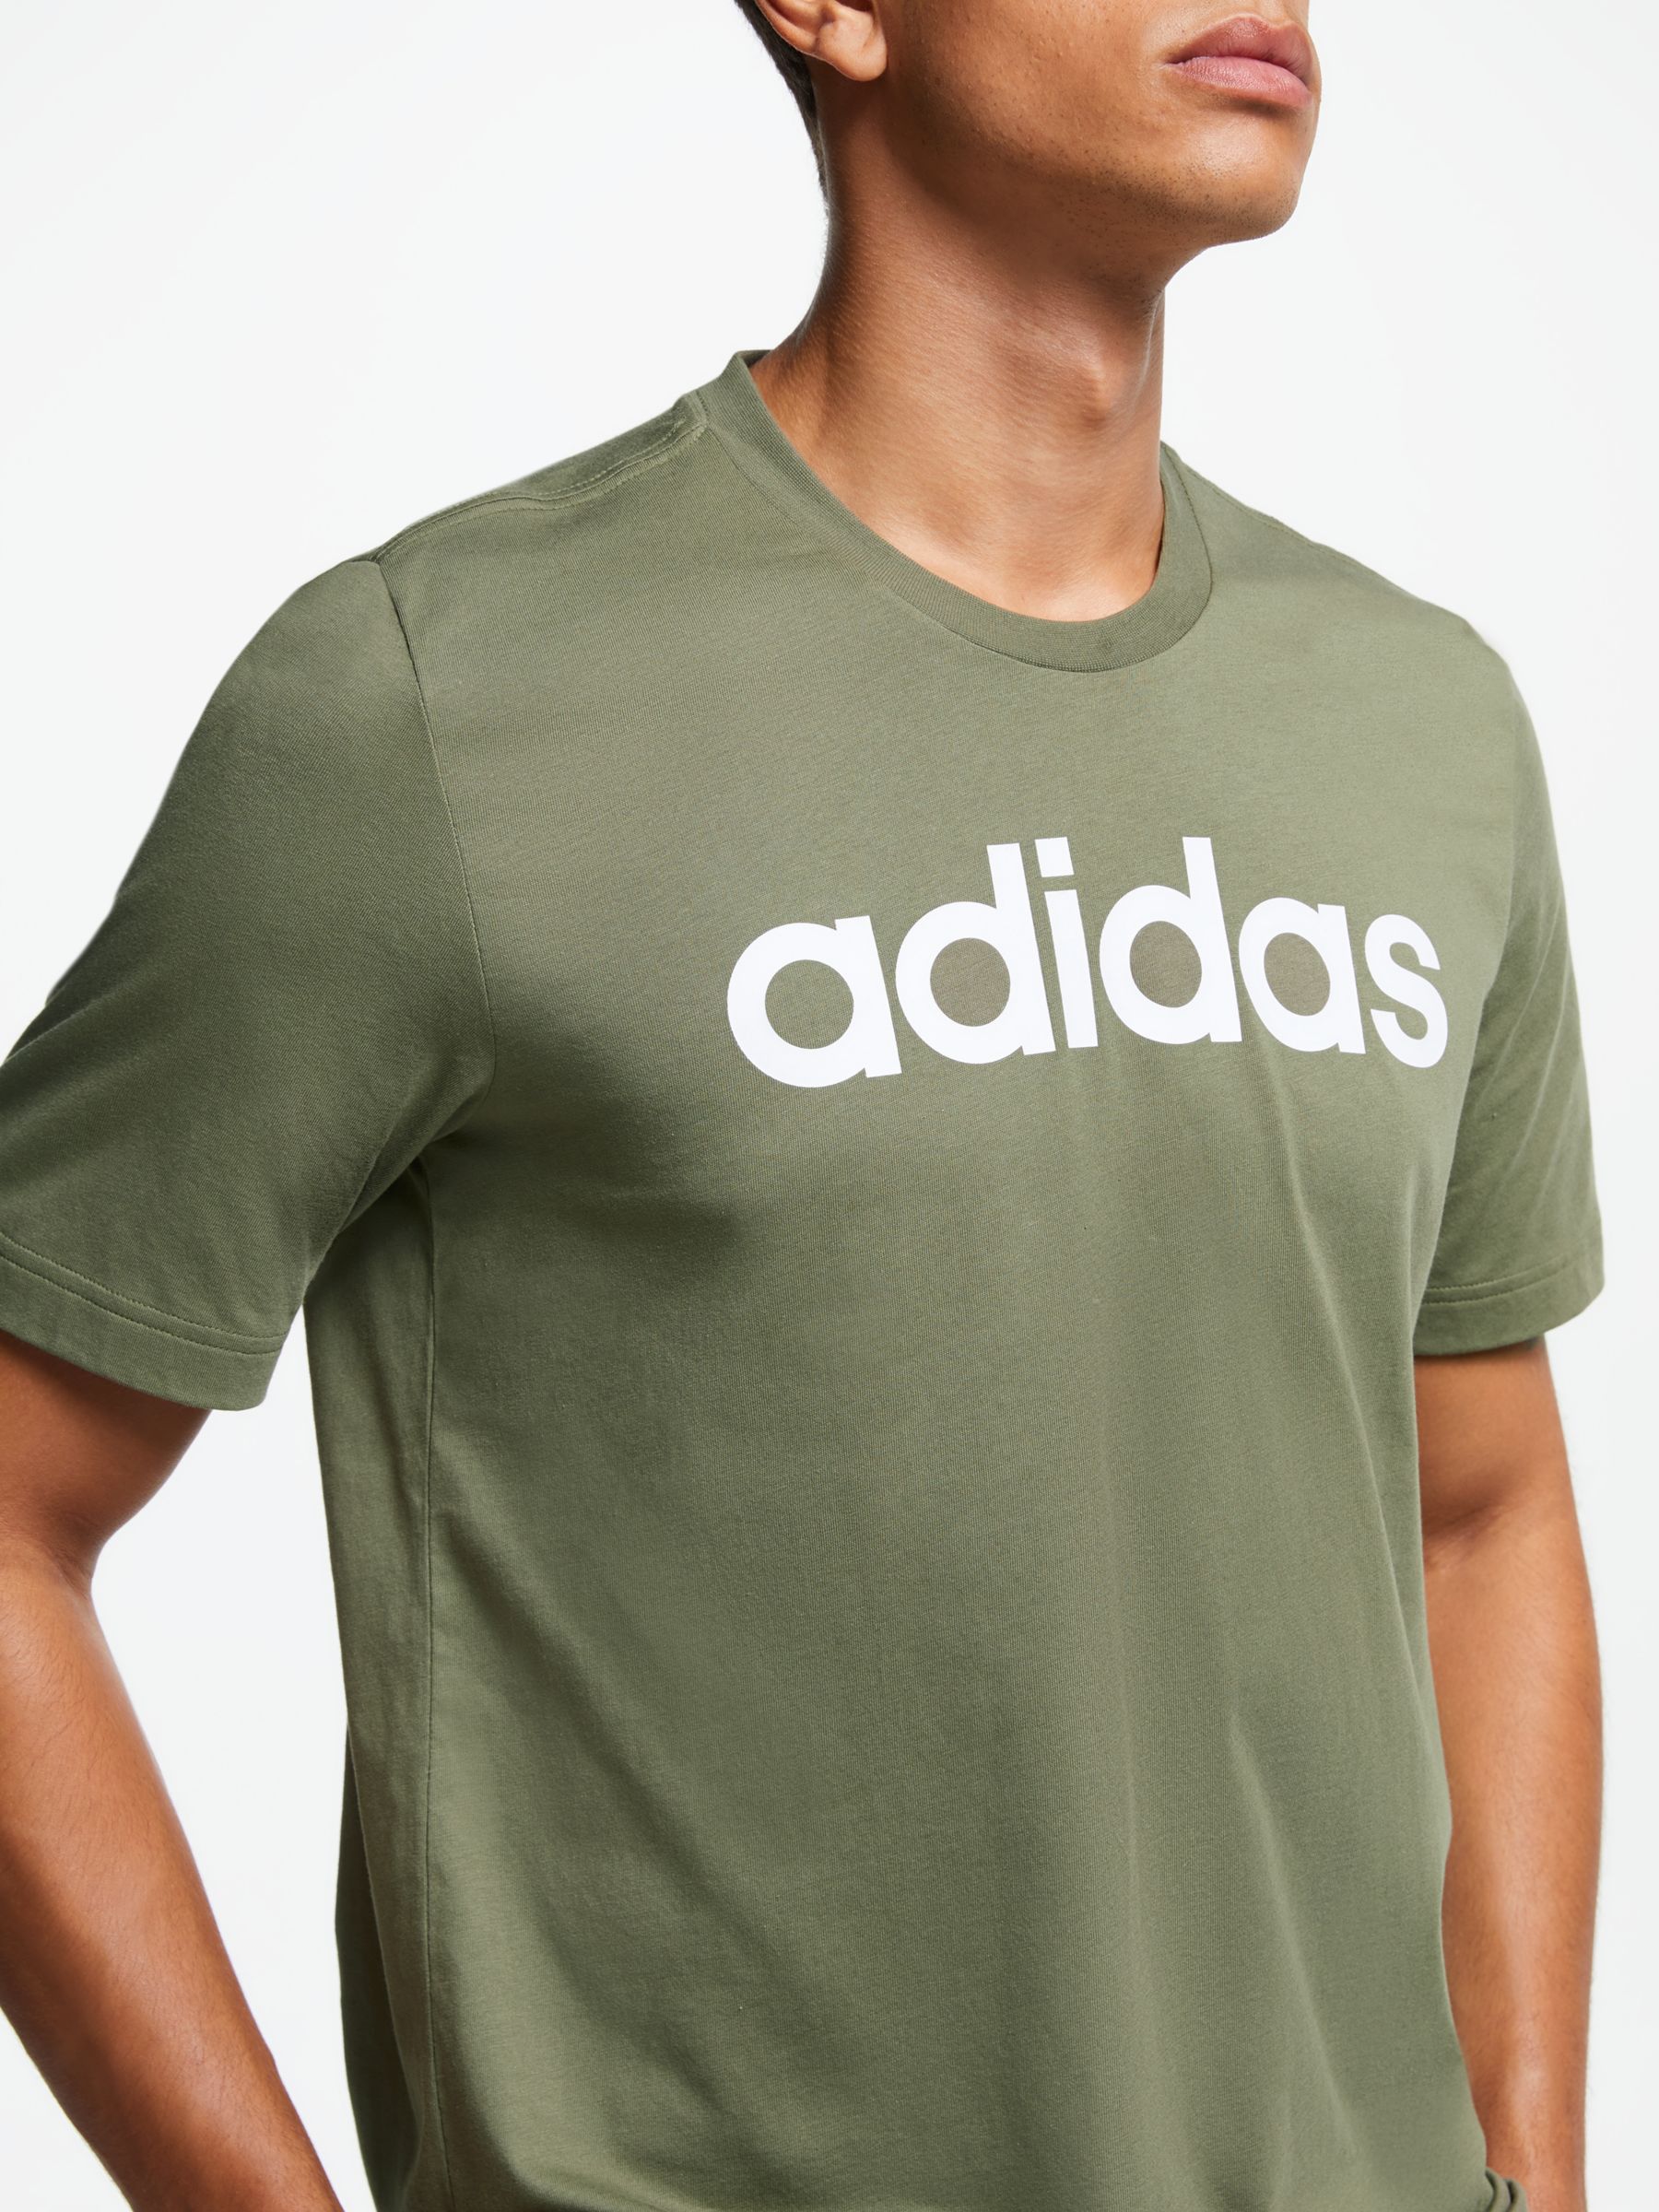 khaki green adidas t shirt